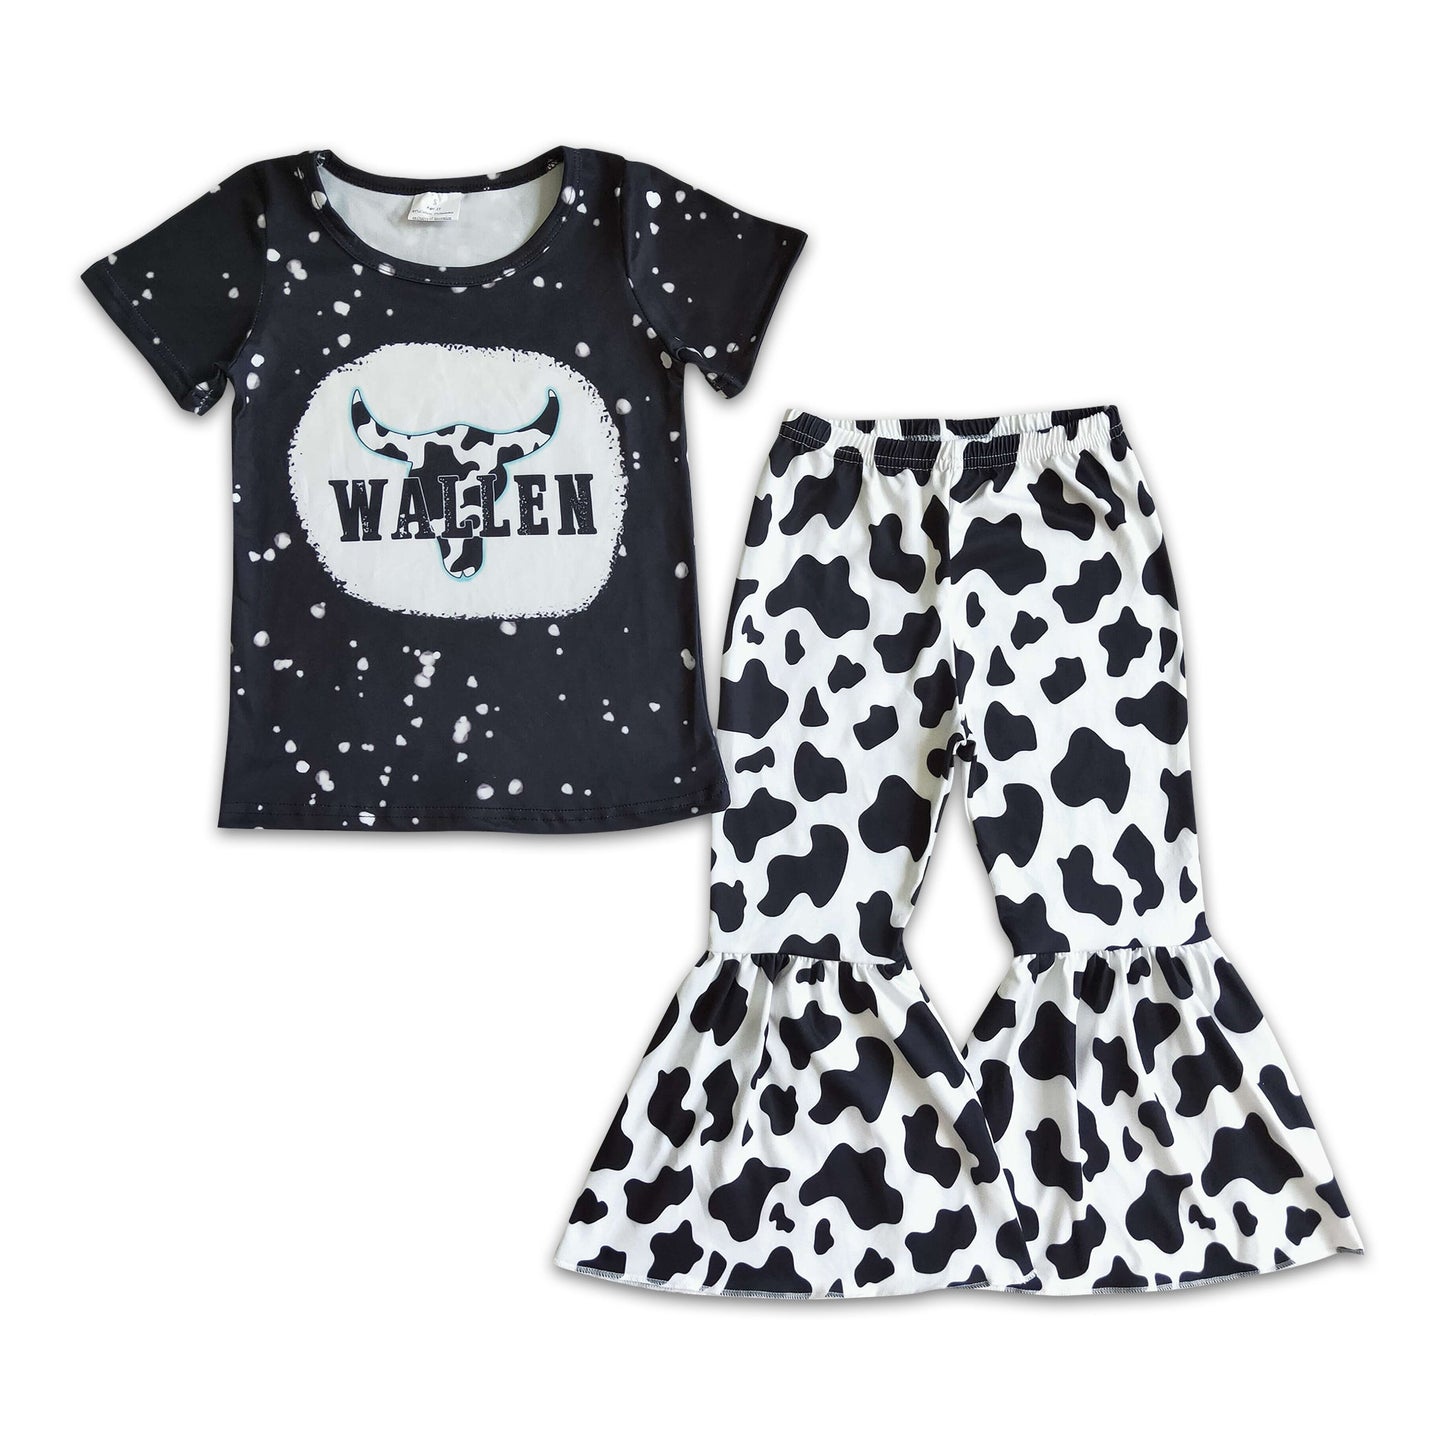 Cow print black bleached shirt girls boutique clothing set